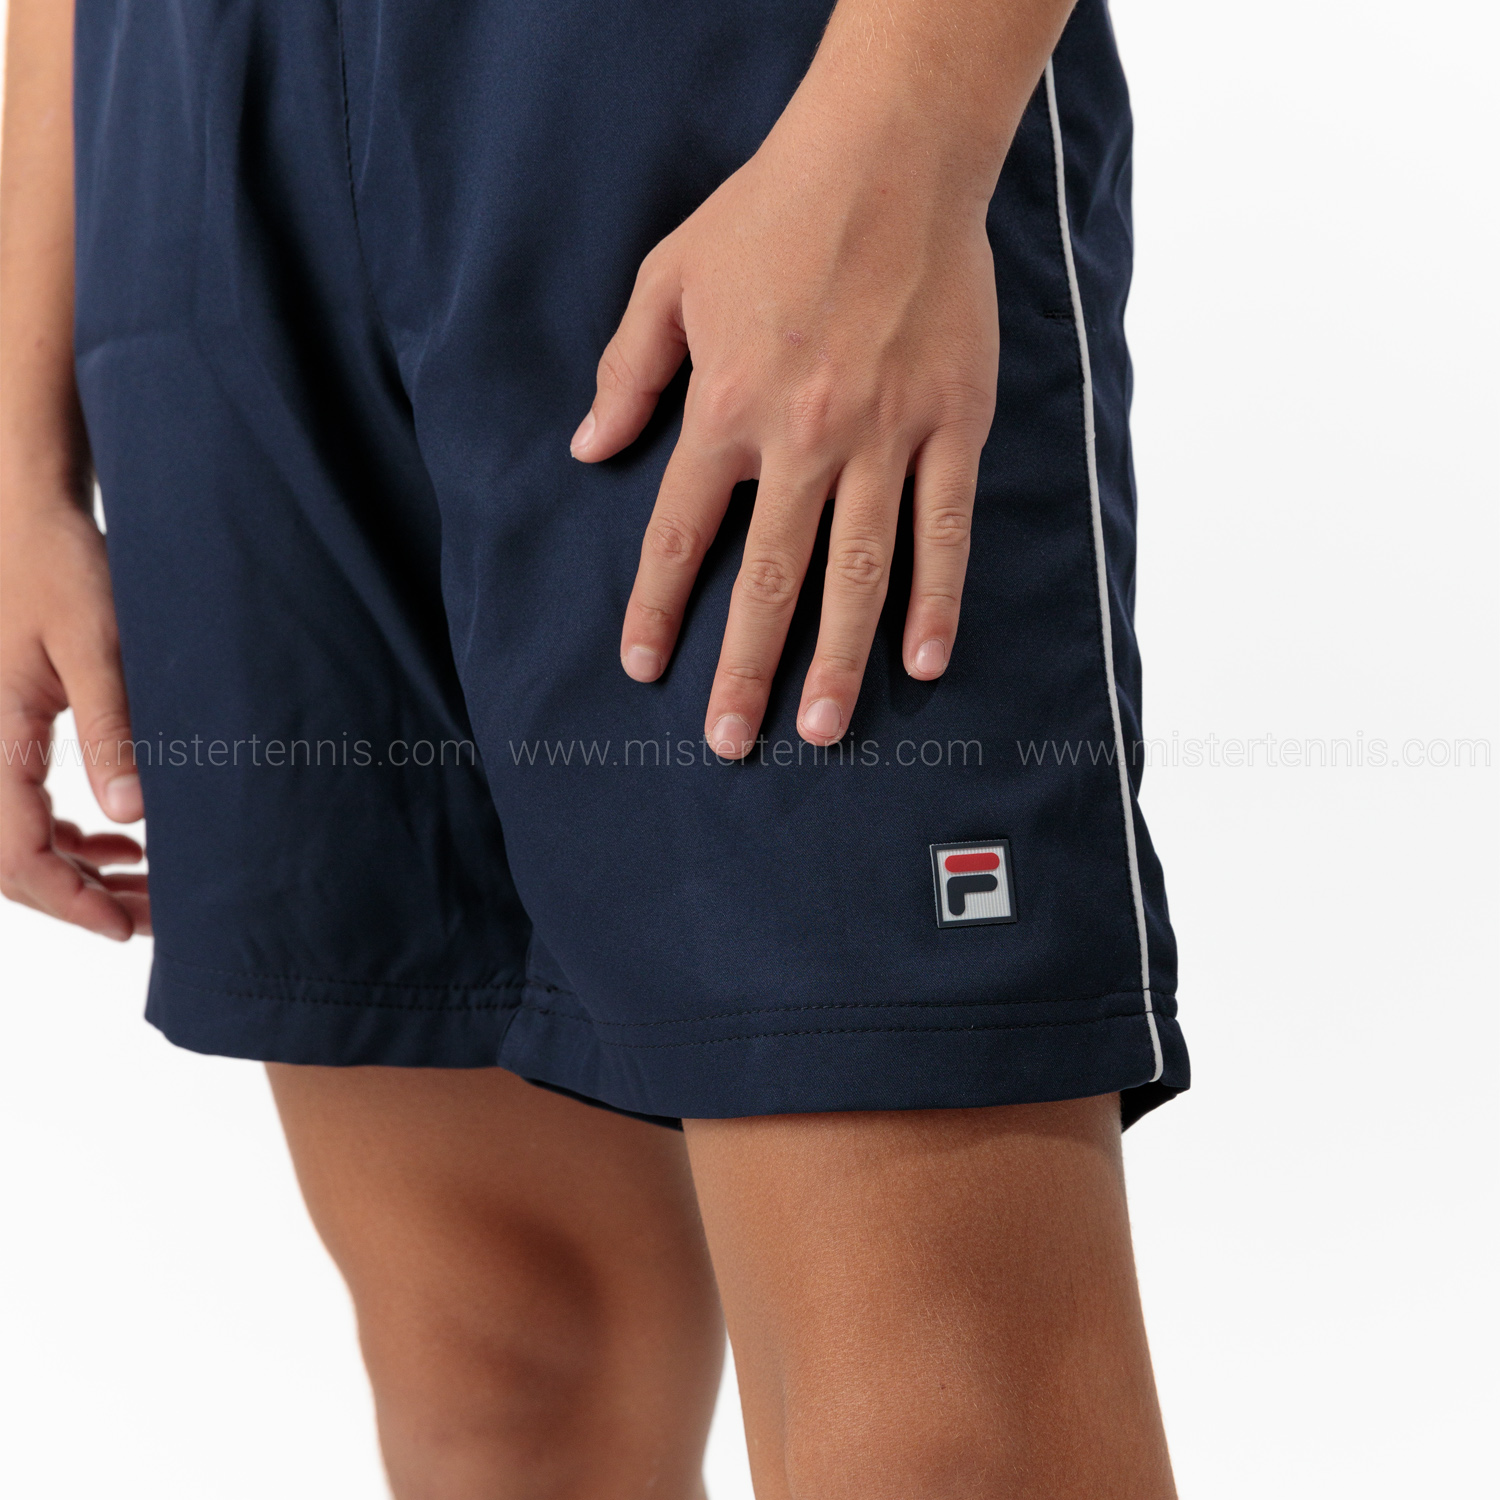 Fila Leon 7in Shorts Boys - Navy